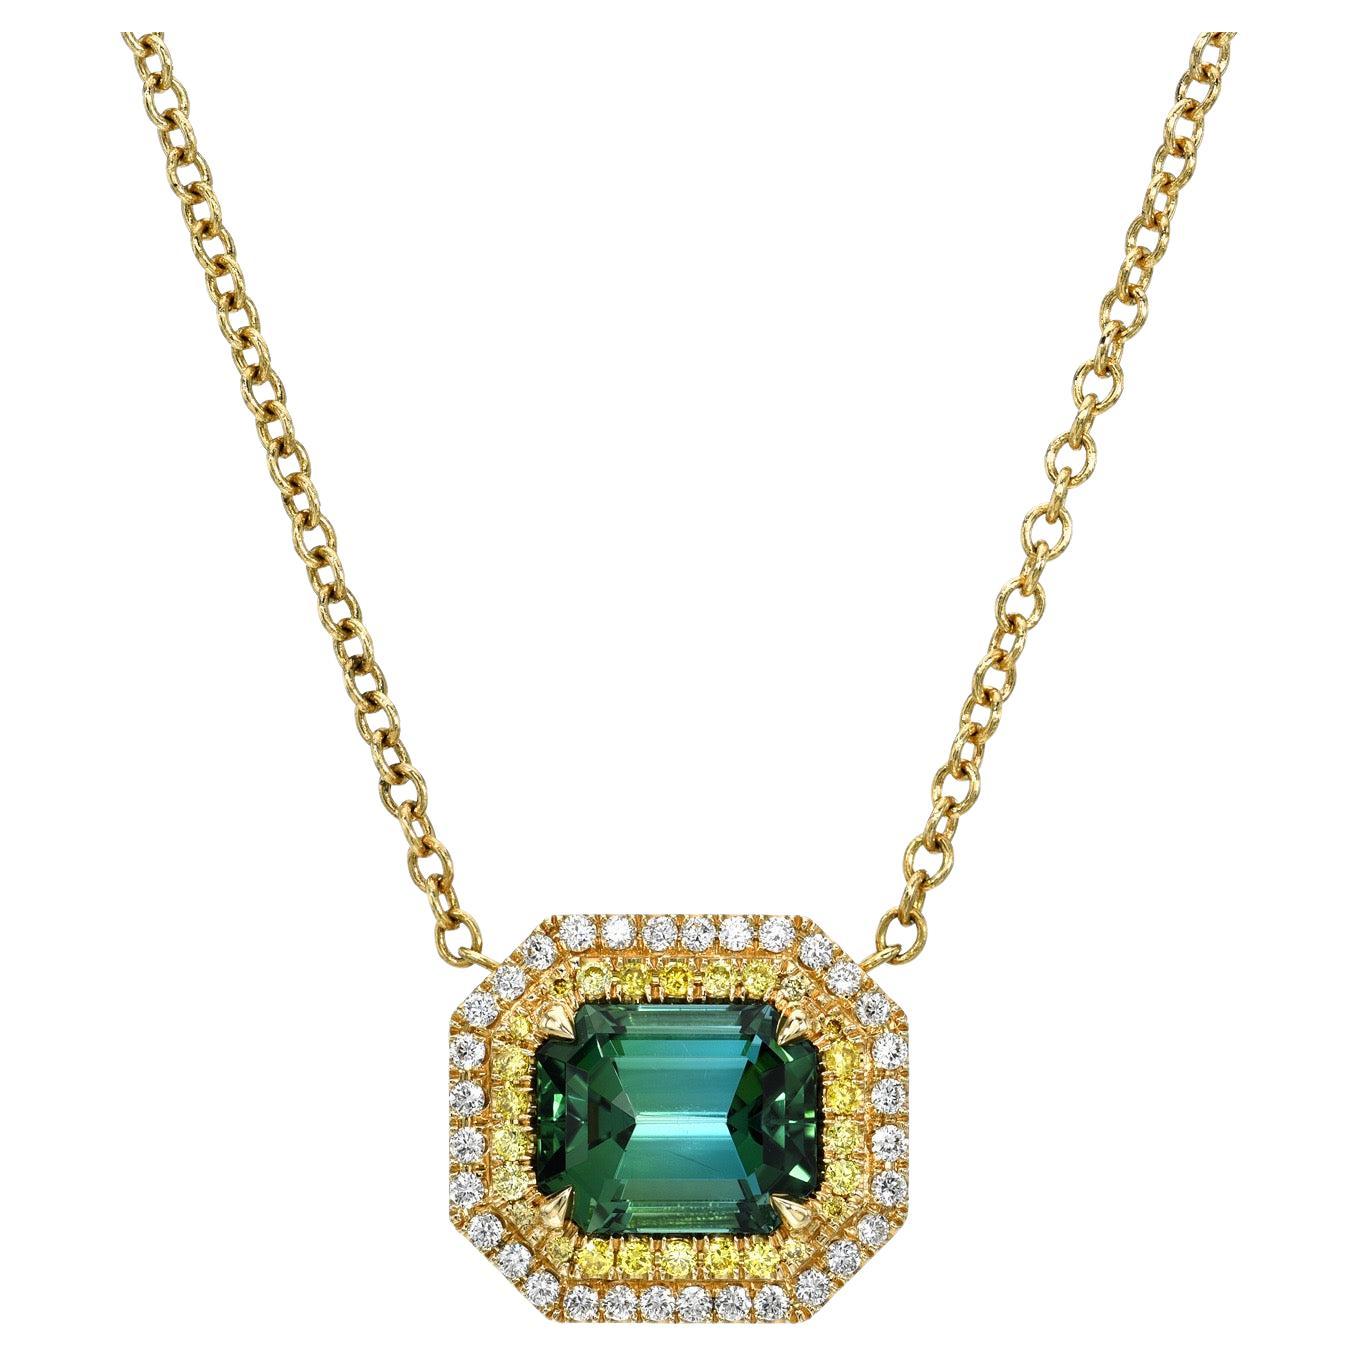 Blue Green Tourmaline Necklace 3.38 Carat Emerald Cut